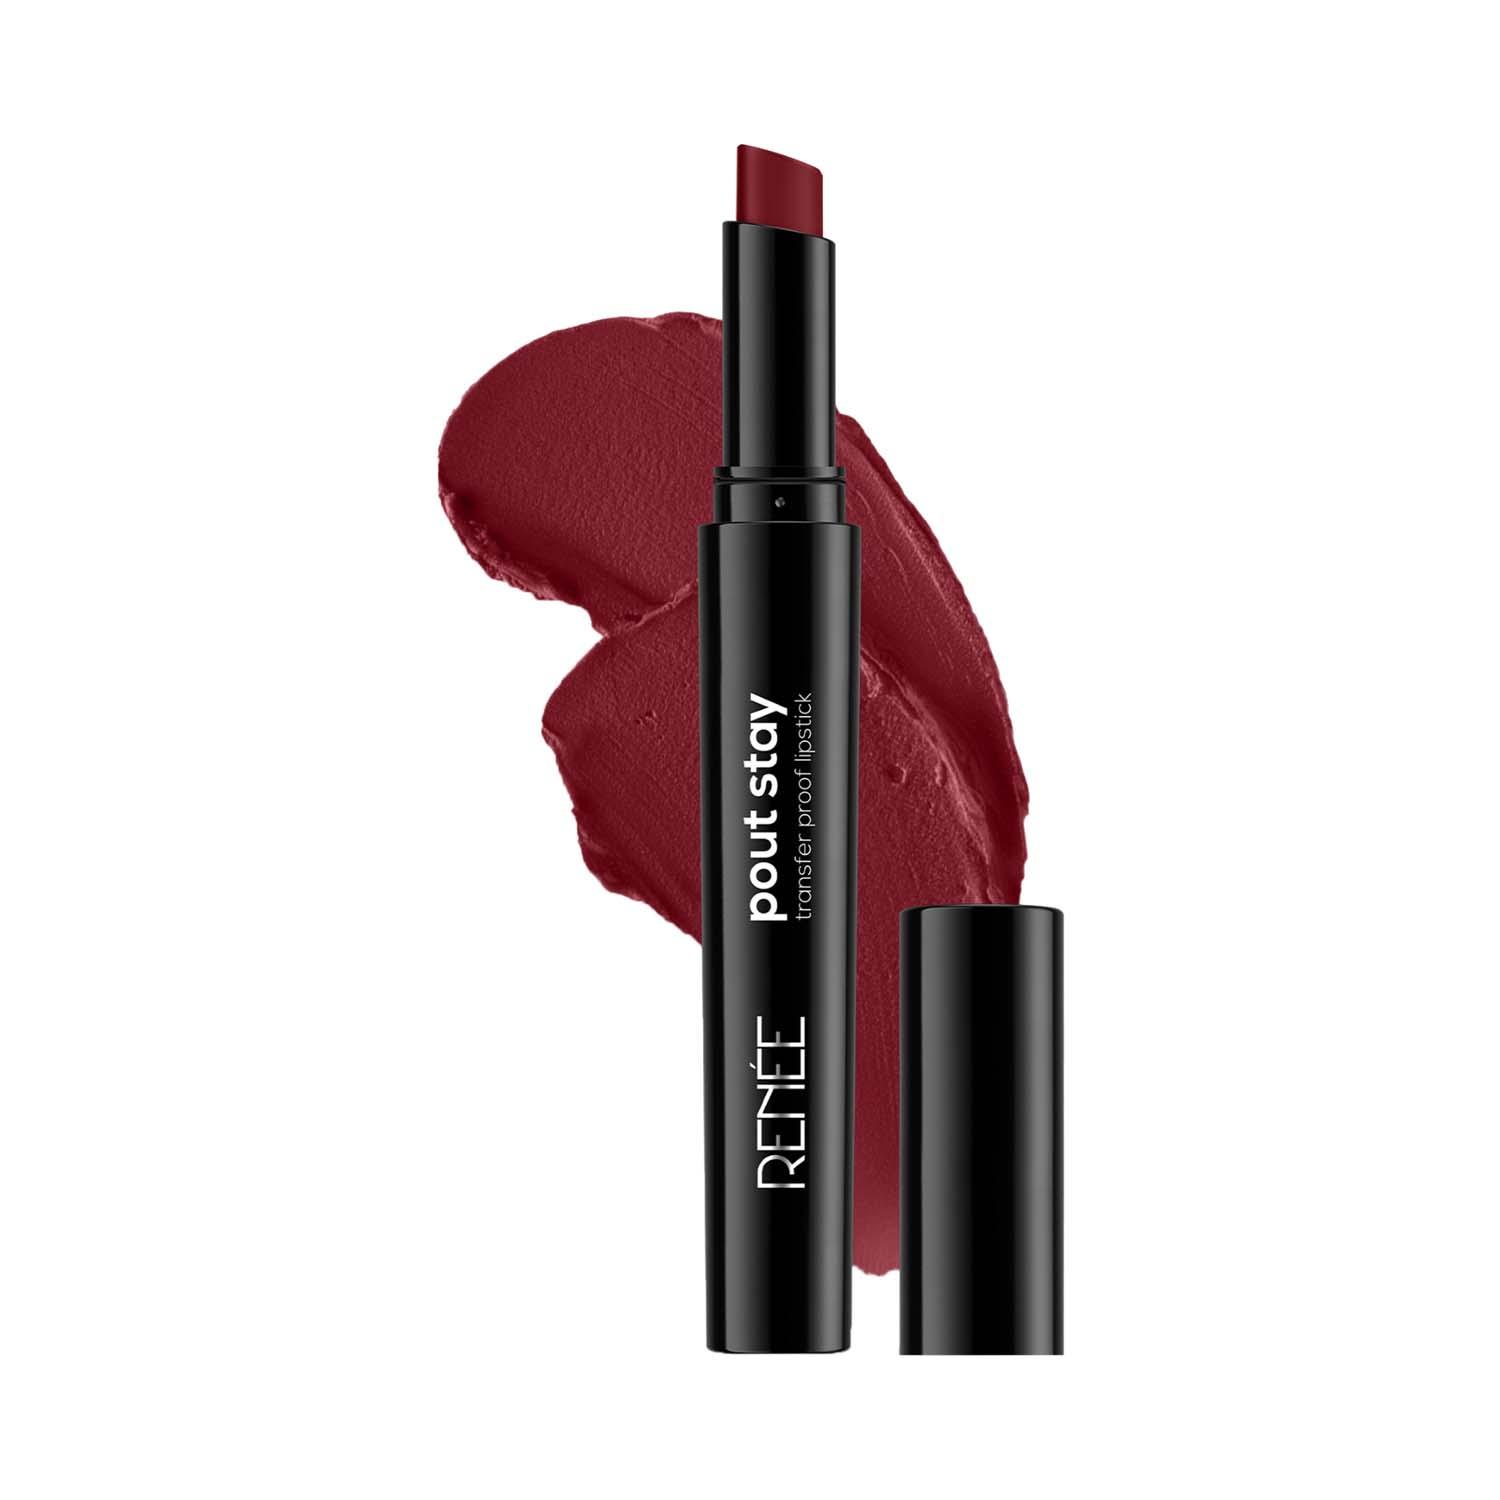 RENEE | RENEE Poutstay Transfer Proof Lipstick - 04 Lily (2 g)